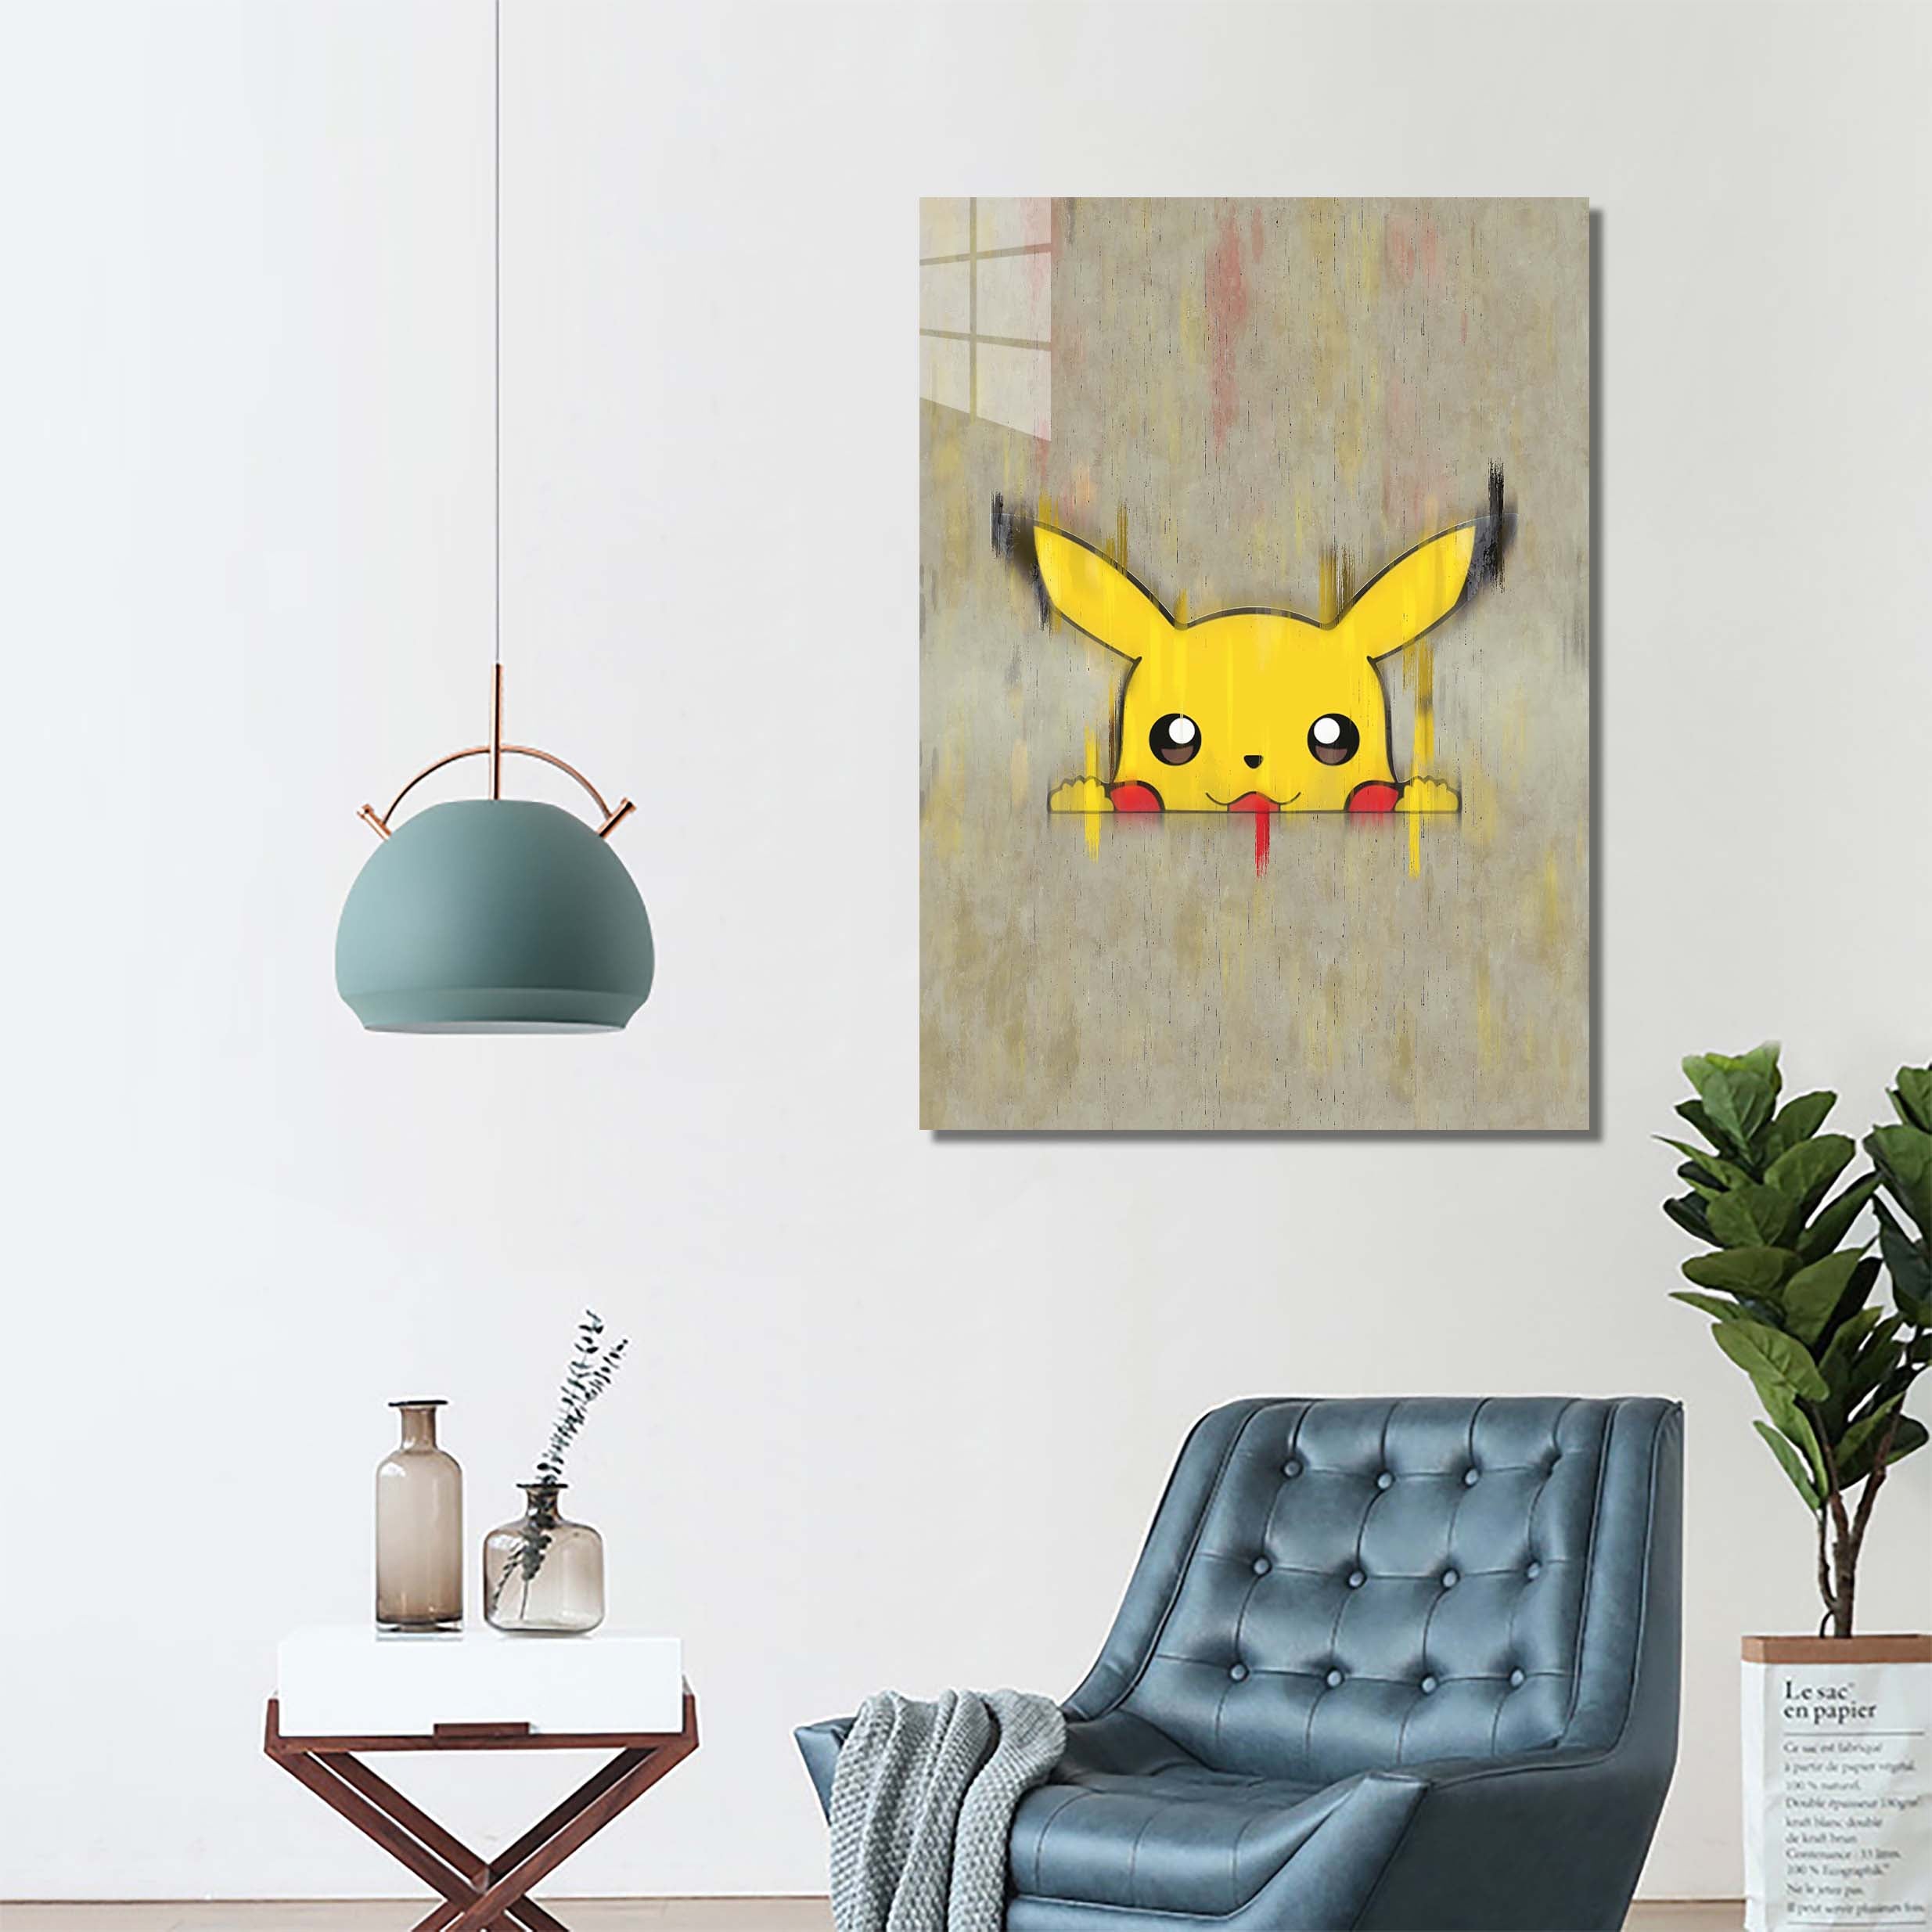 Peeping Pikachu-designed by @rizal.az